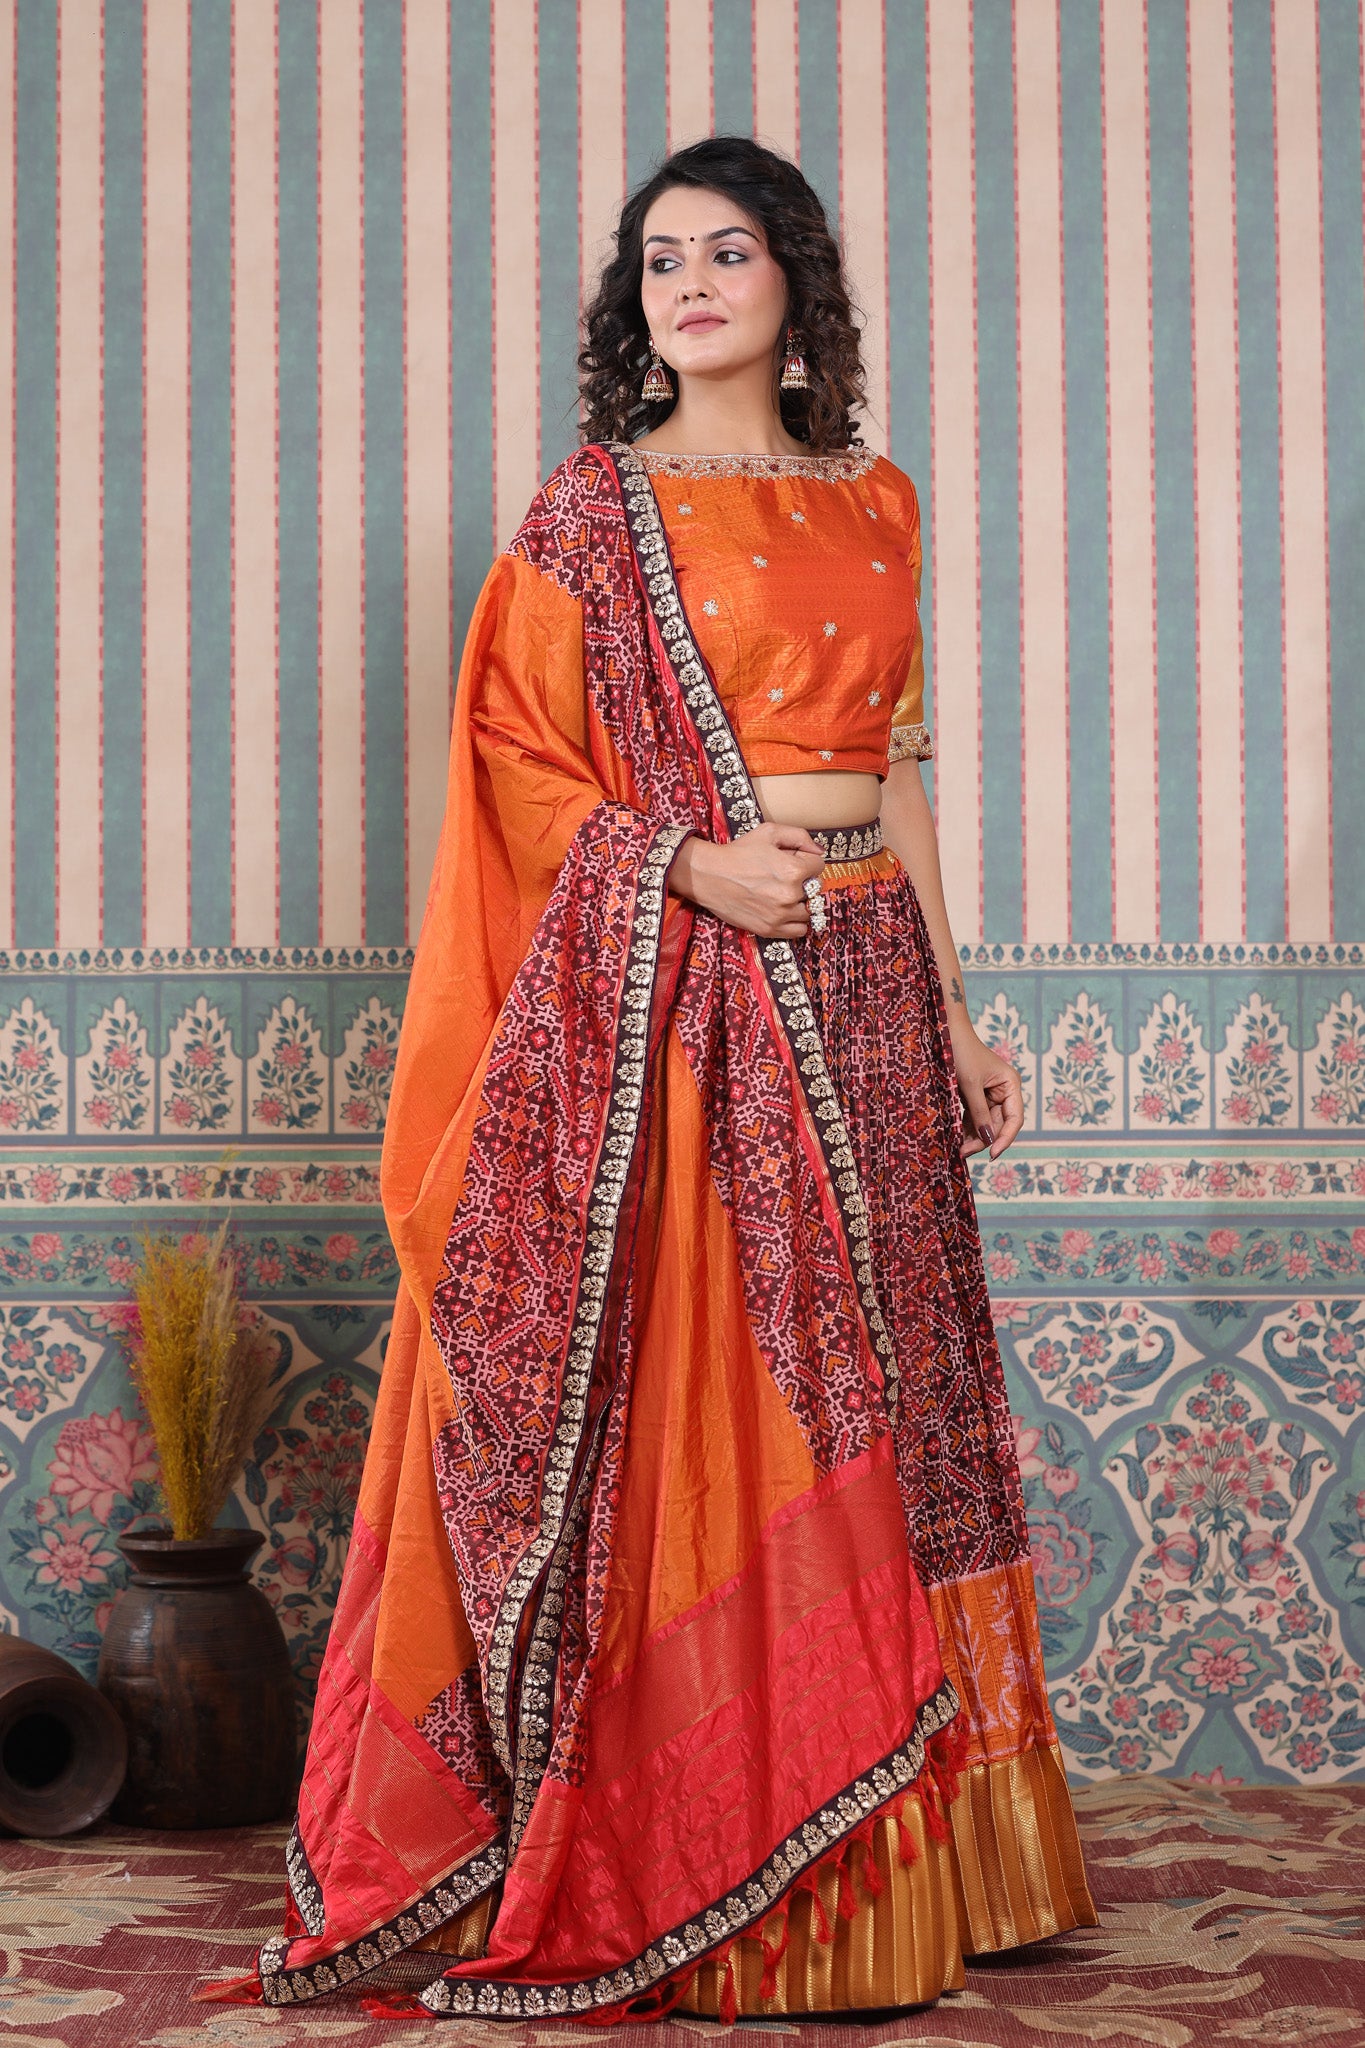 Regal Scarlet and Gold Long Sleeve Lehenga Set – Saris and Things